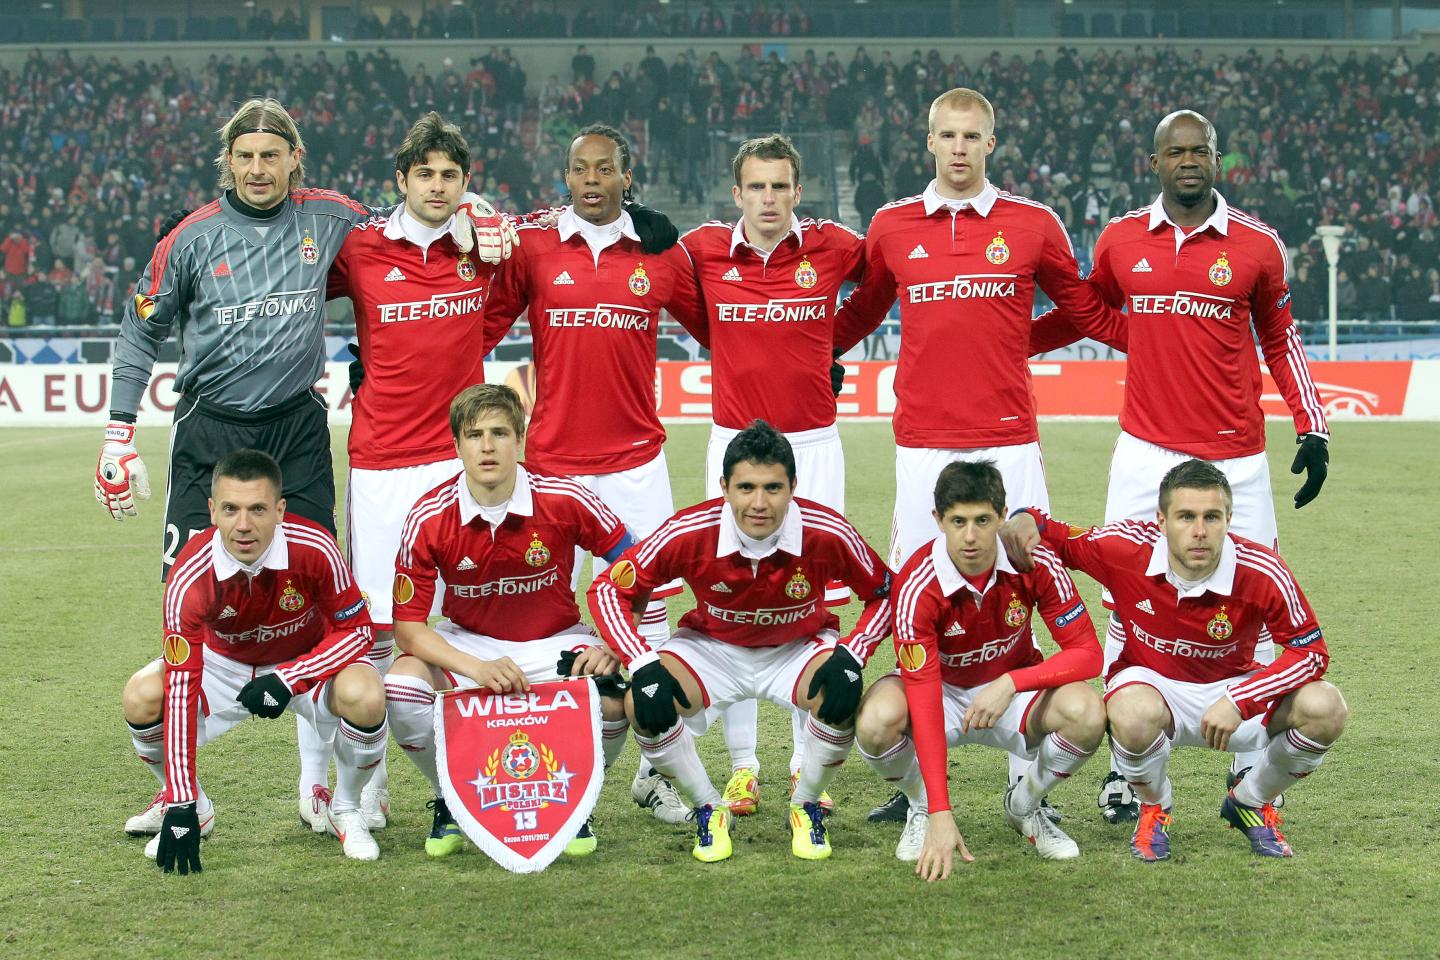 Wisła Kraków - Standard Liège 1:1 (16.02.2012)